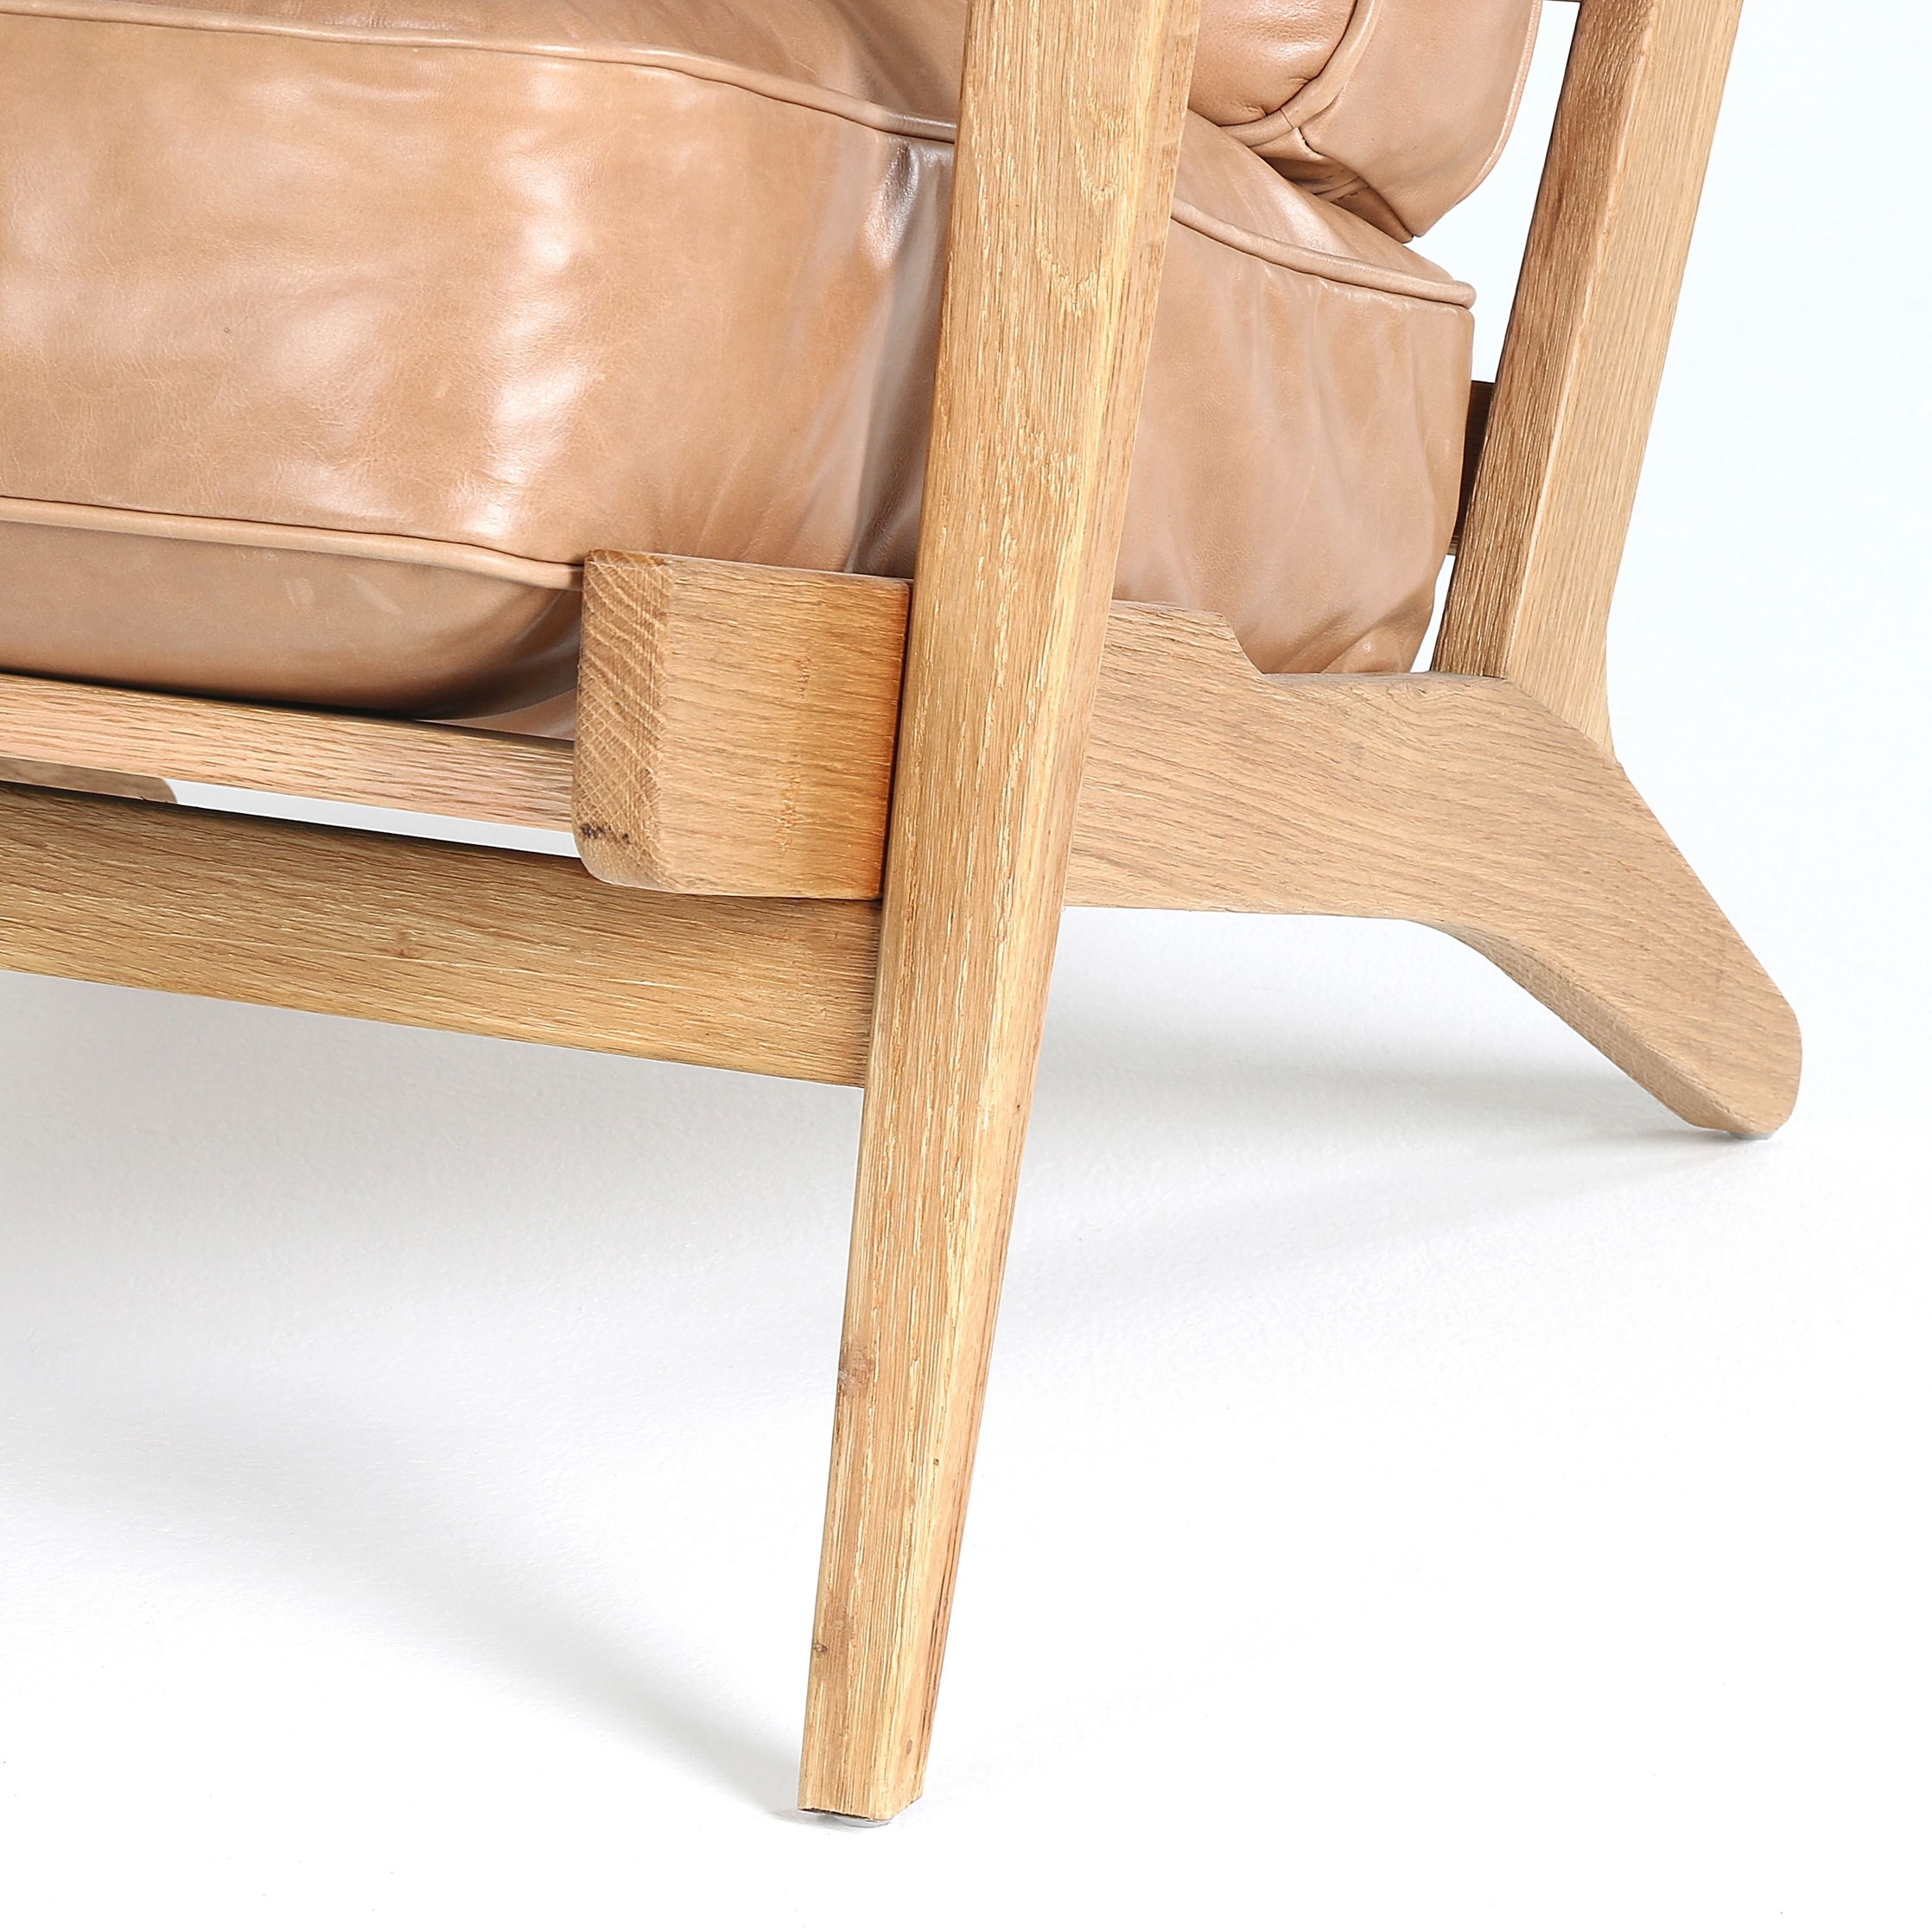 Austin Accent Chair - Image 2